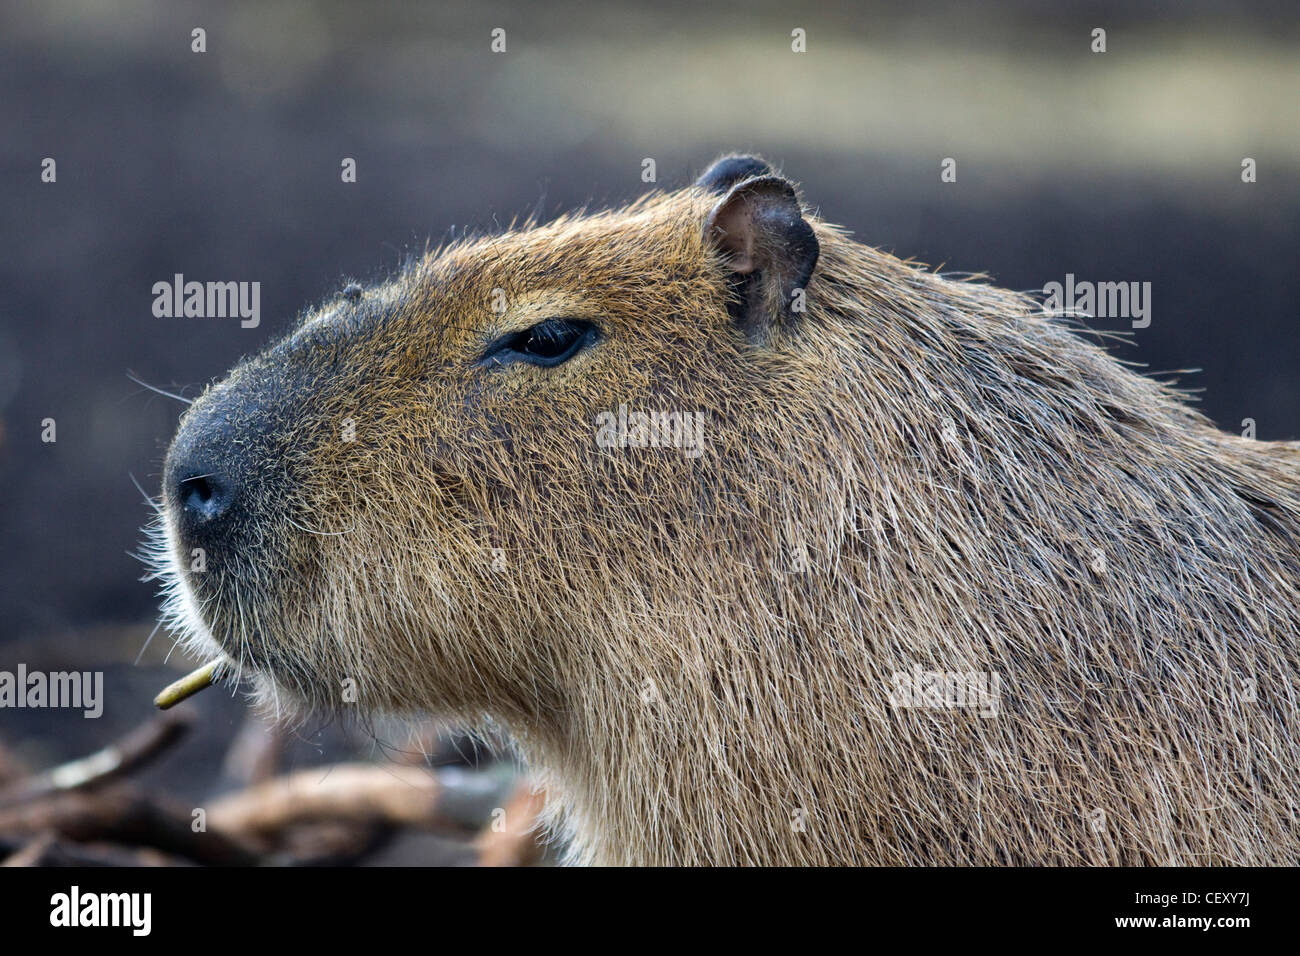 capybara Hydrochoerus hydrochaeris in Captivity Stock Photo